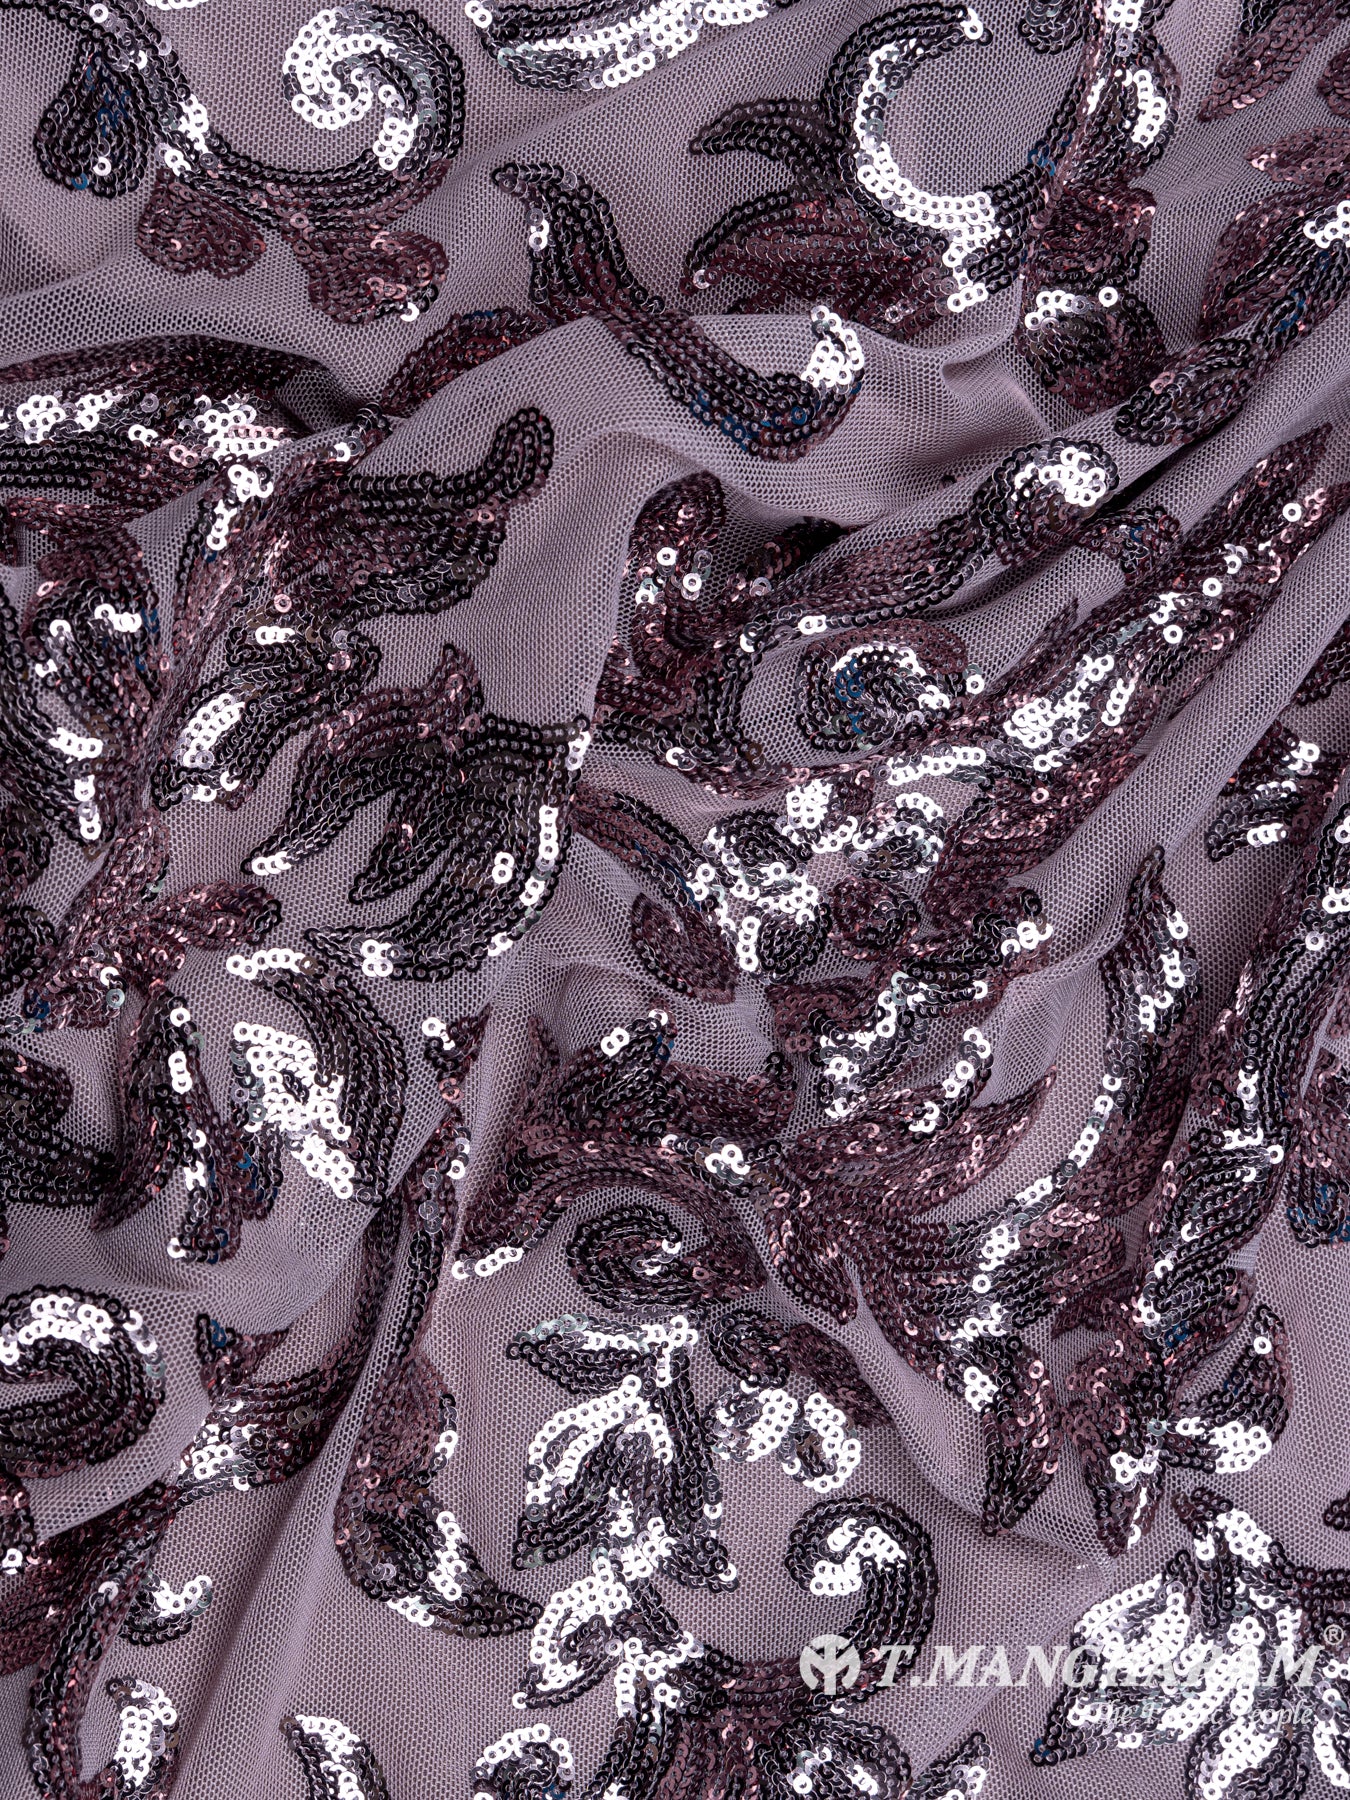 Violet Fancy Net Fabric - EC4052 view-4